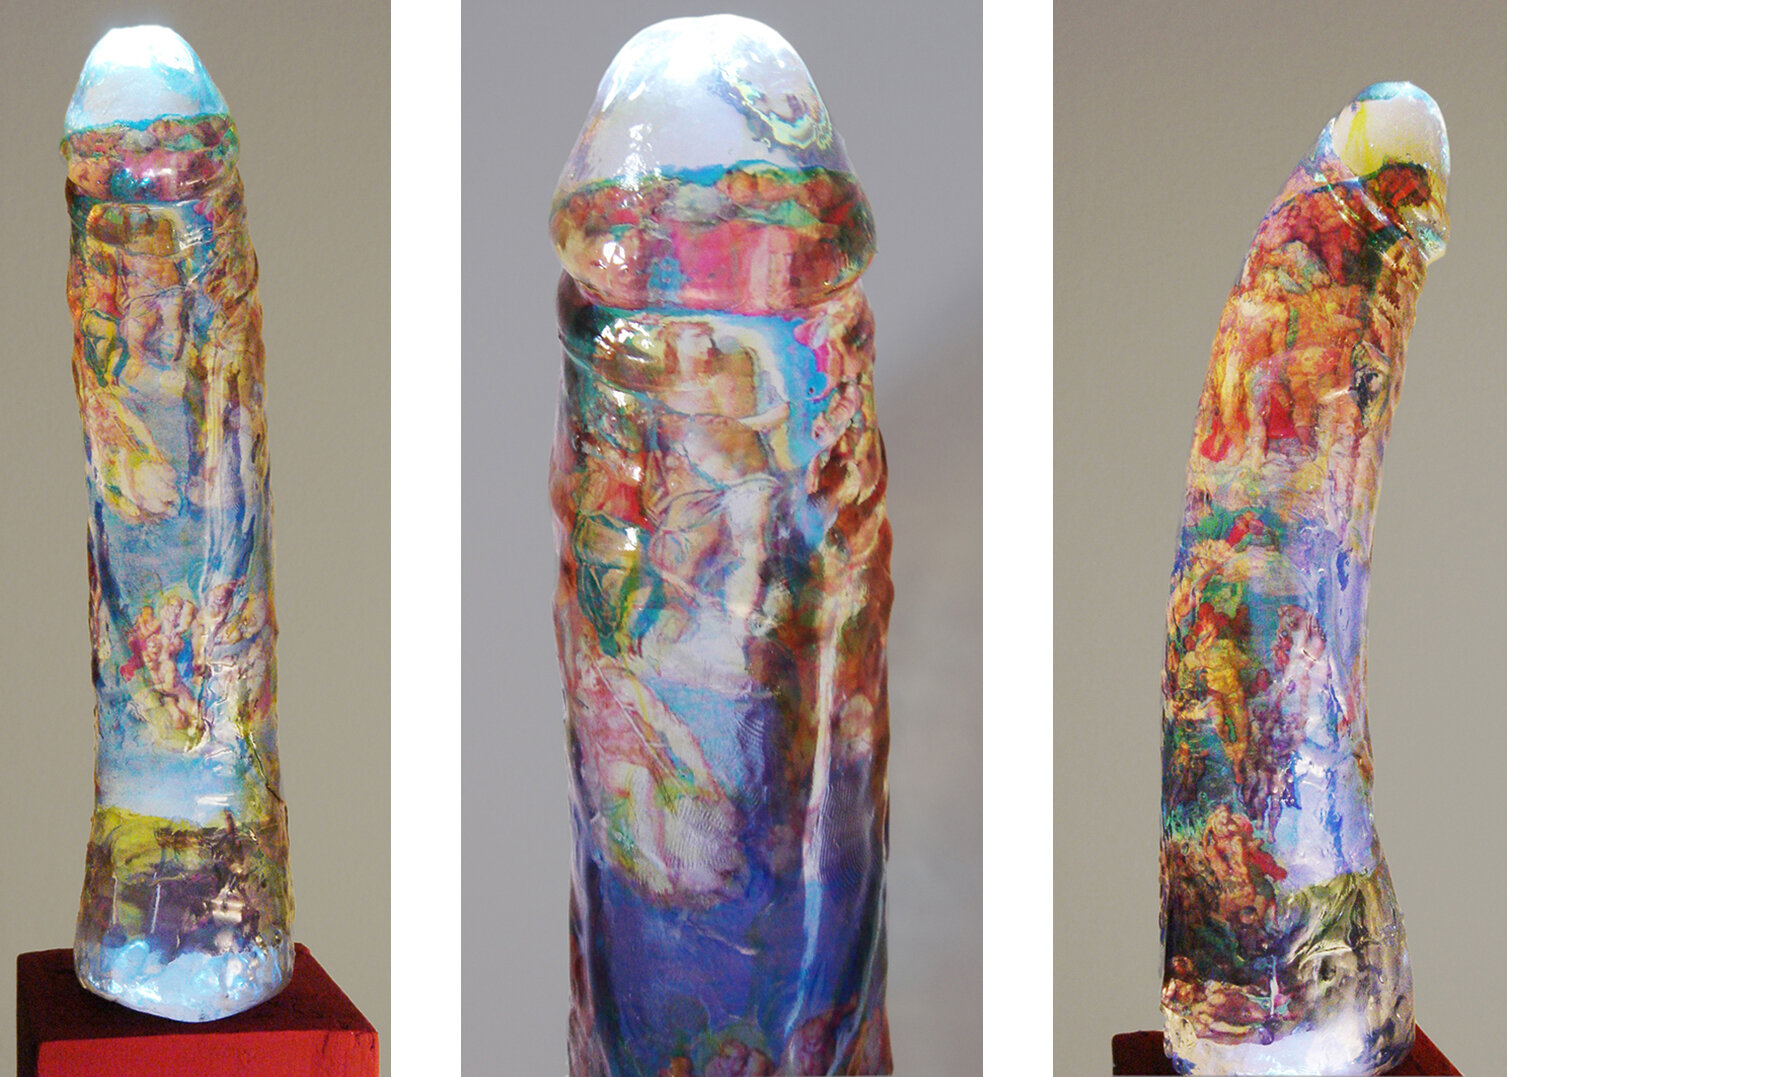   Modus operandi (2008) Loïc Martin   Epoxy resin, laser printing on acetate (1,6-1,9 ∅ x 7,5 inches/ 4-5 ∅ x 19 cm). Pedestal : wood , acrylic paint, led torch, chew, screws (4,3 x 2,3 x 2,3 inches / 11 x 6 x 6 cm) 